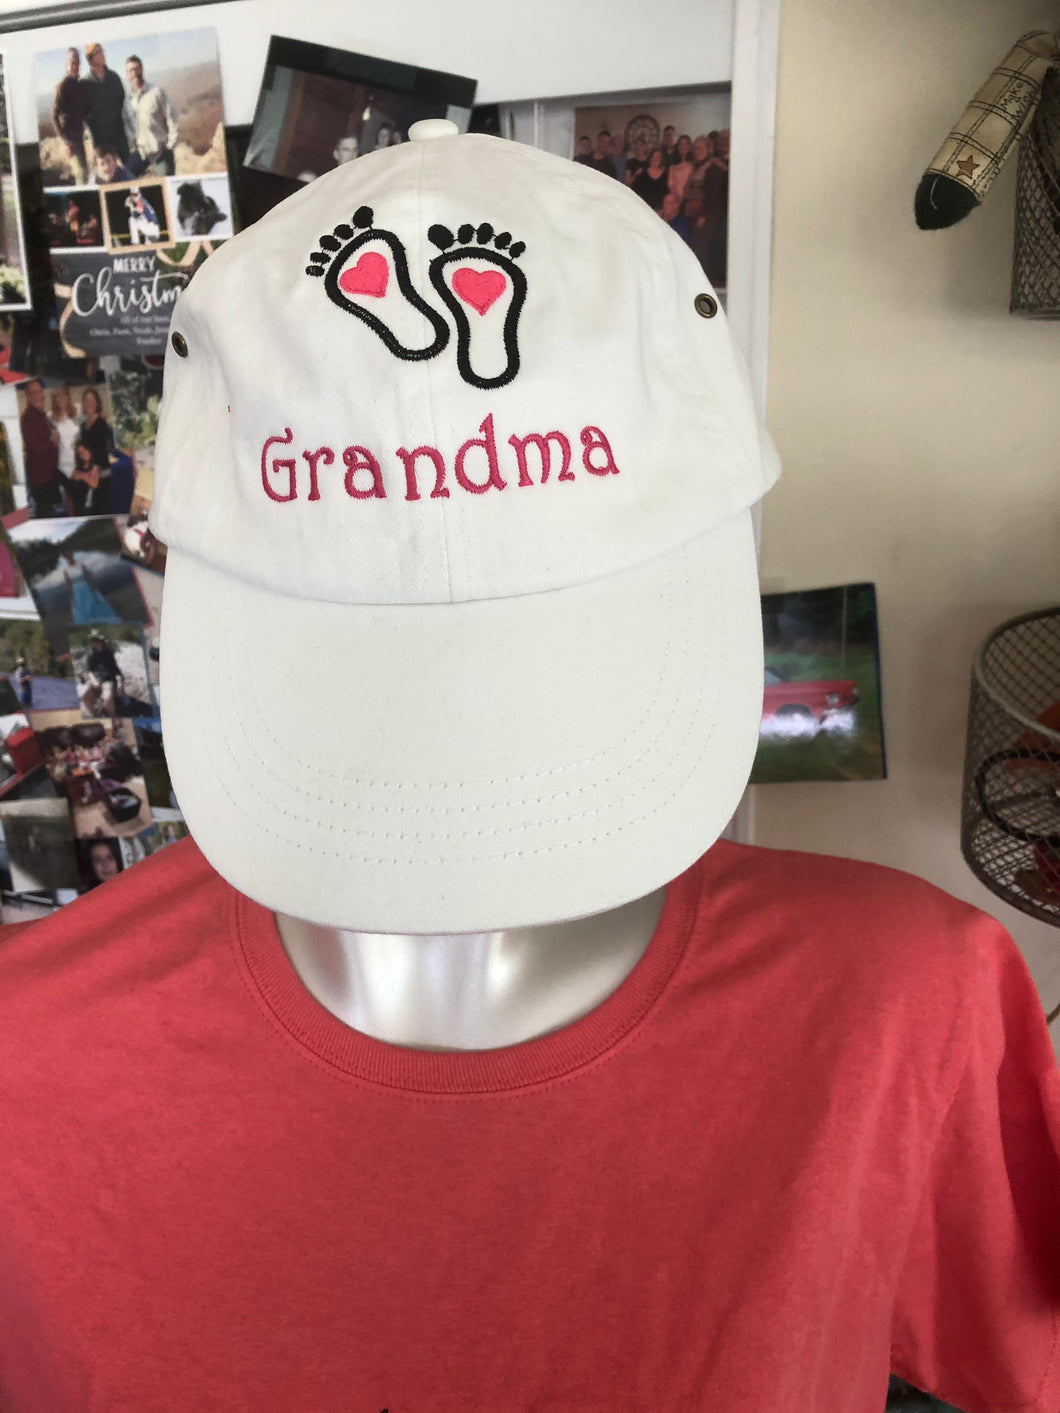 Grandma feet white hat